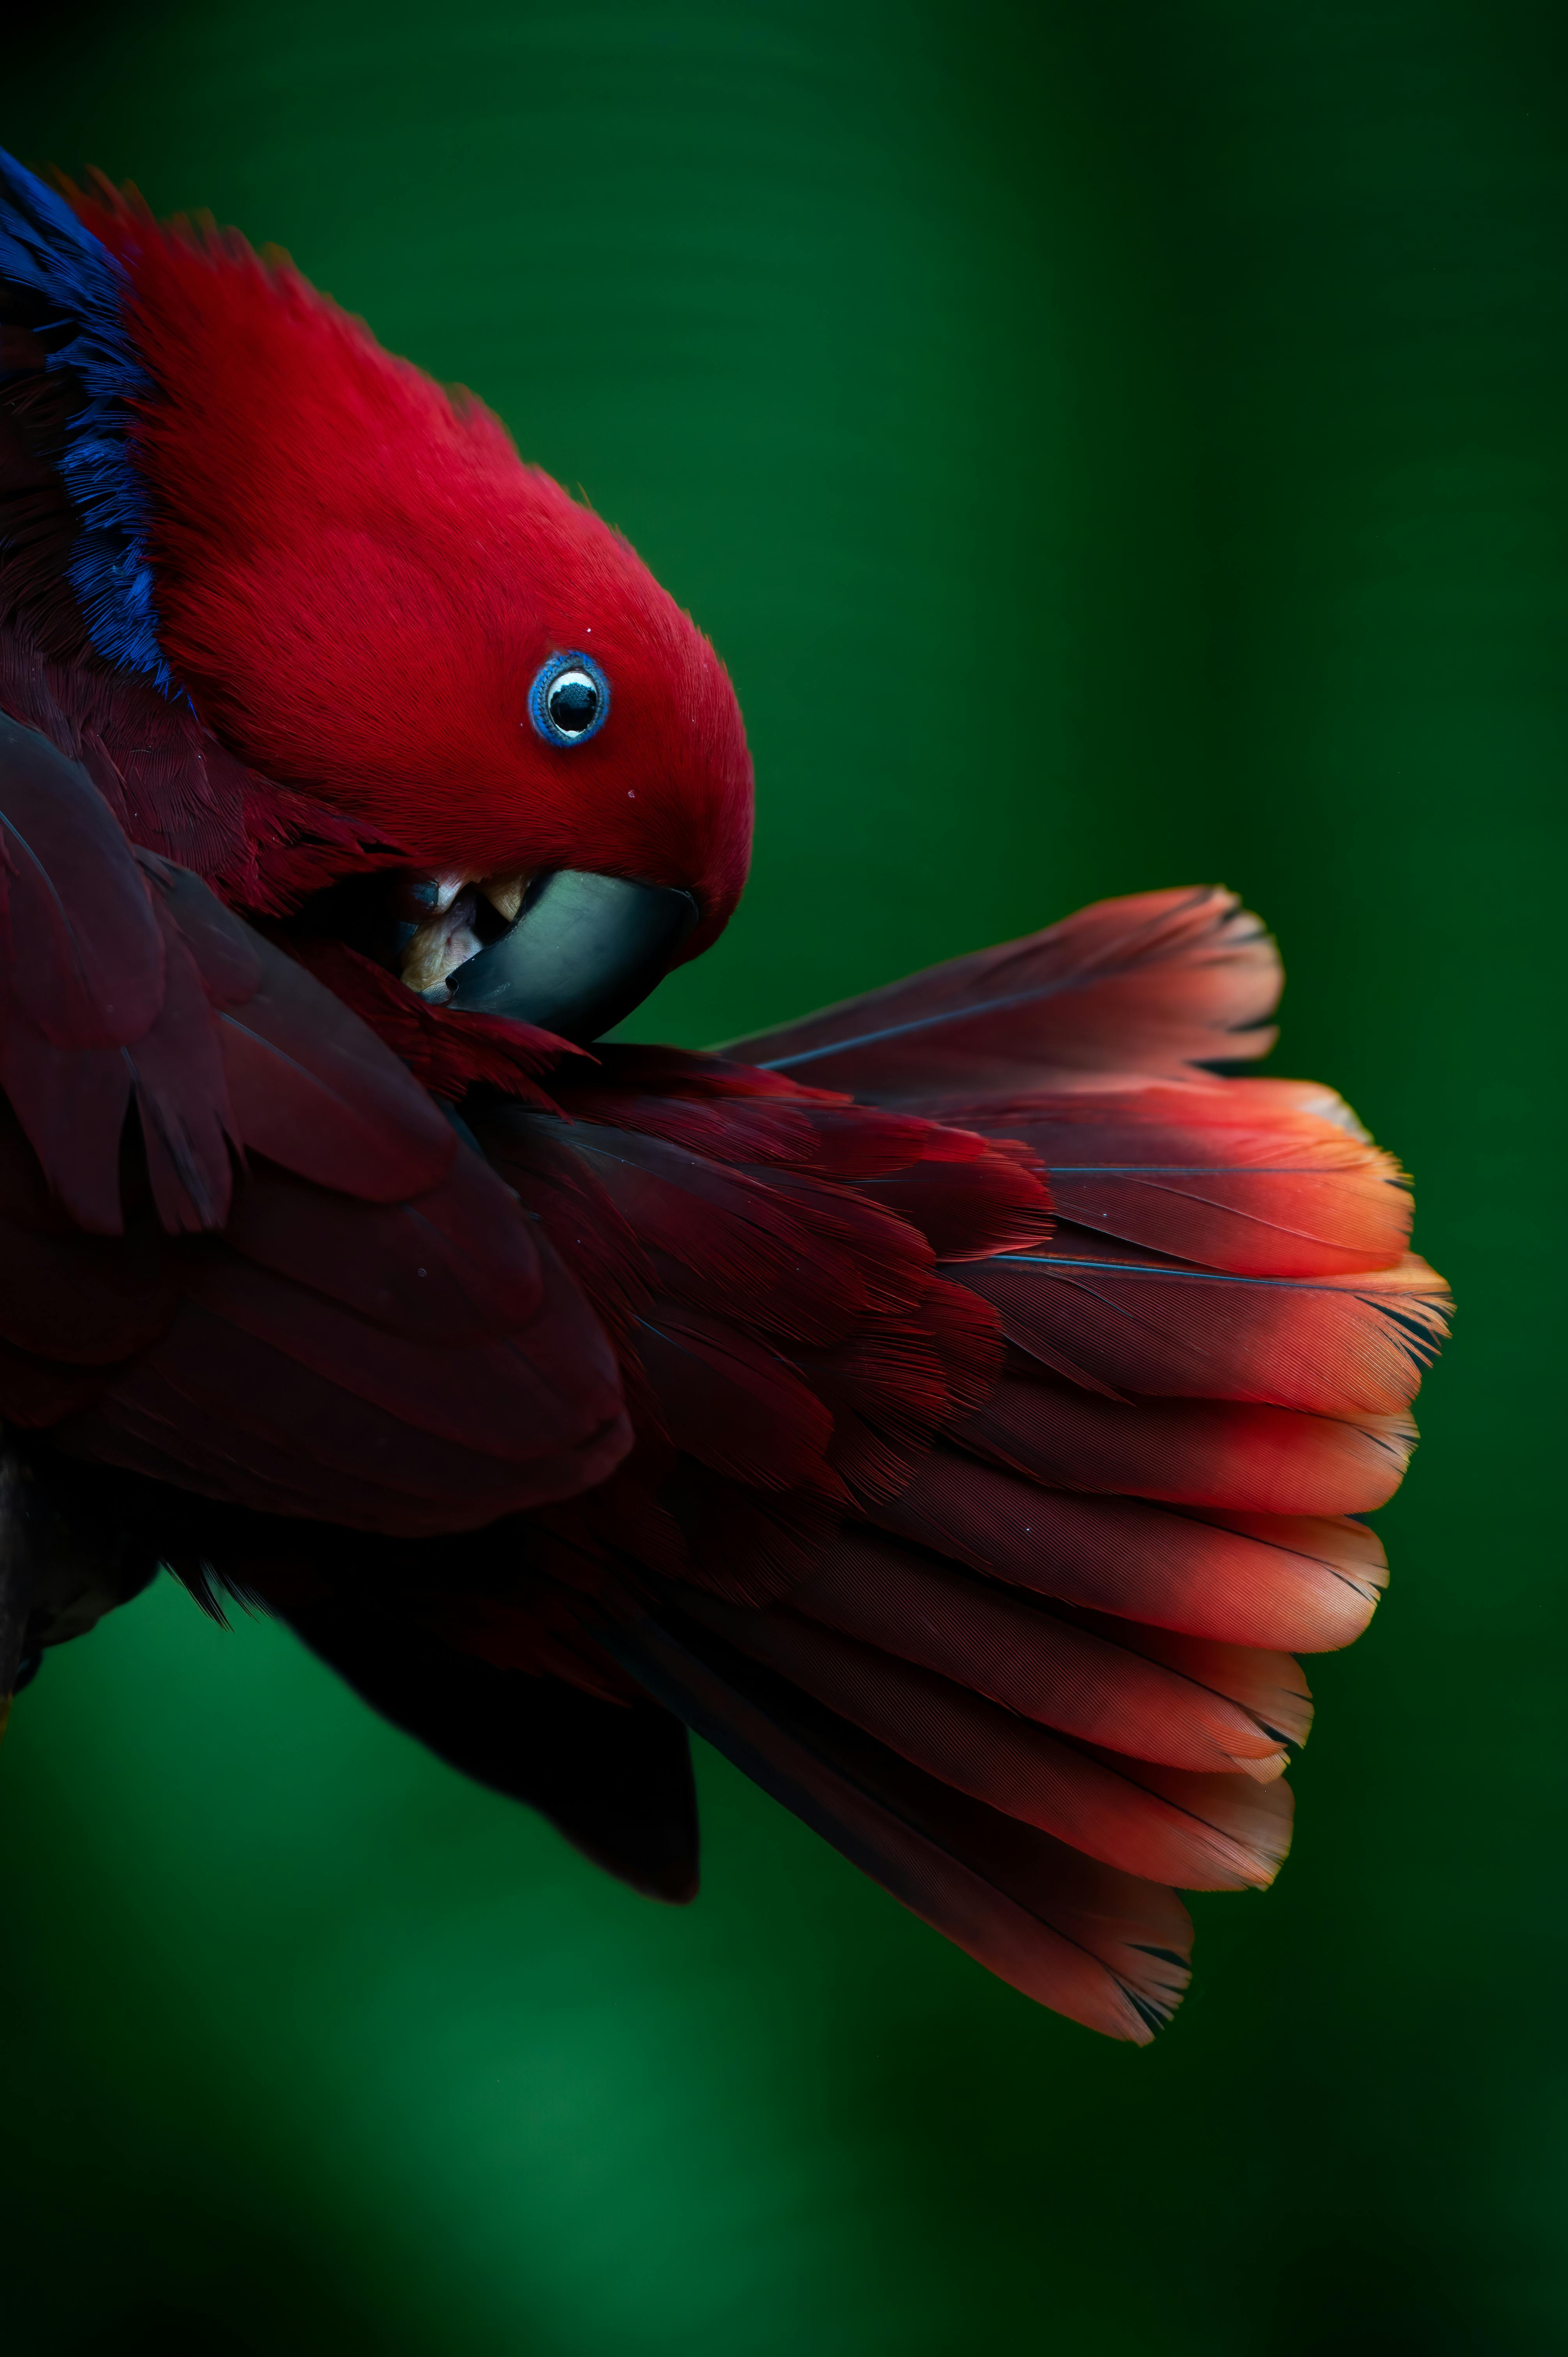 amazon rainforest wallpaper birds